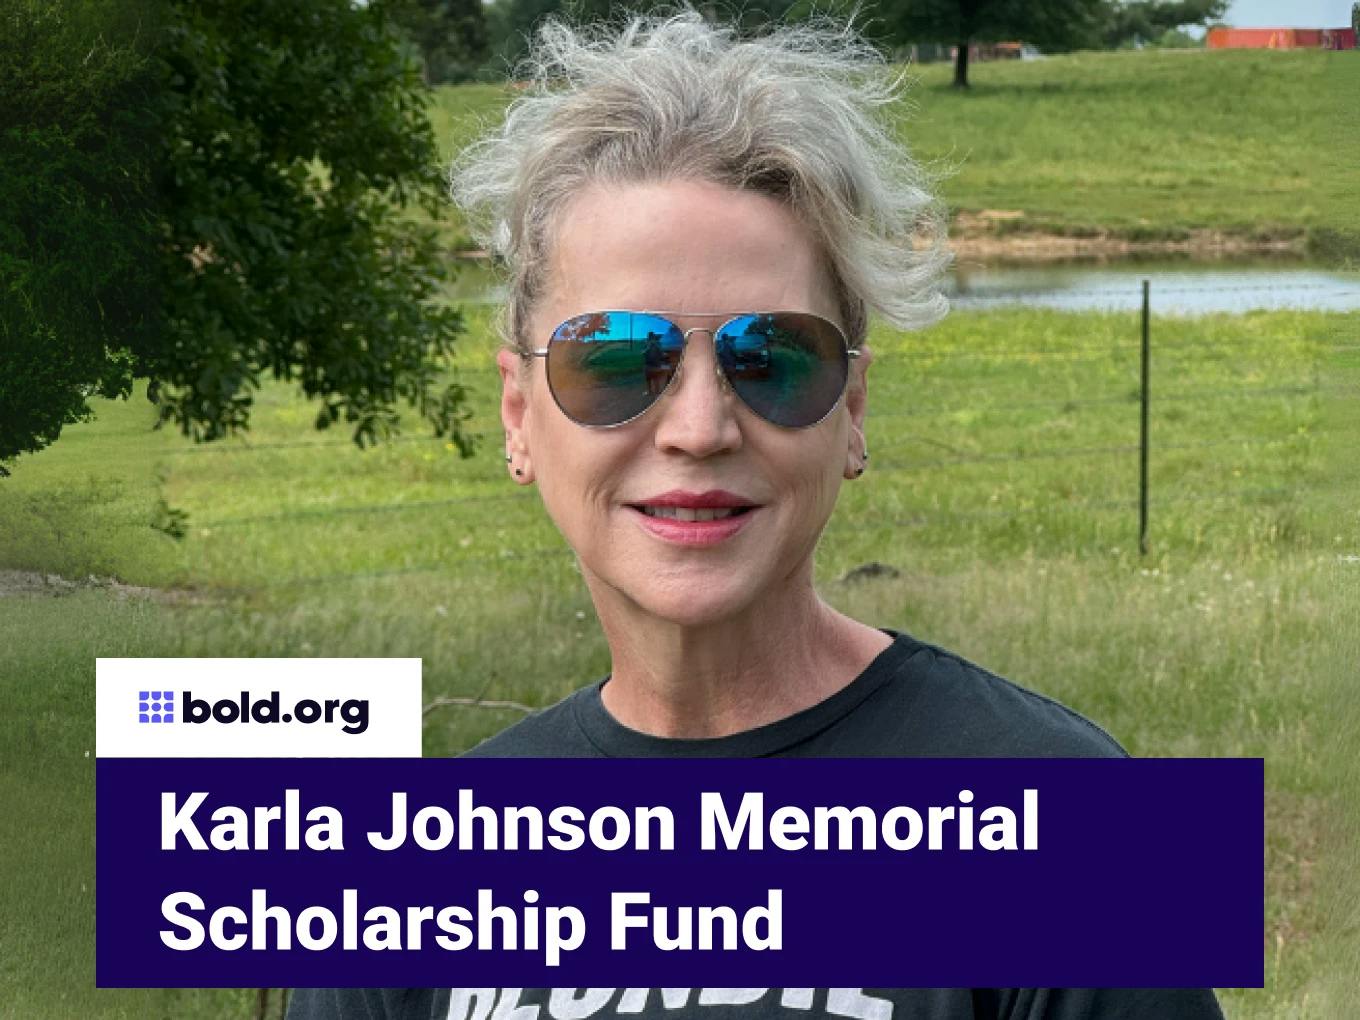 Karla Johnson Memorial Scholarship Fund